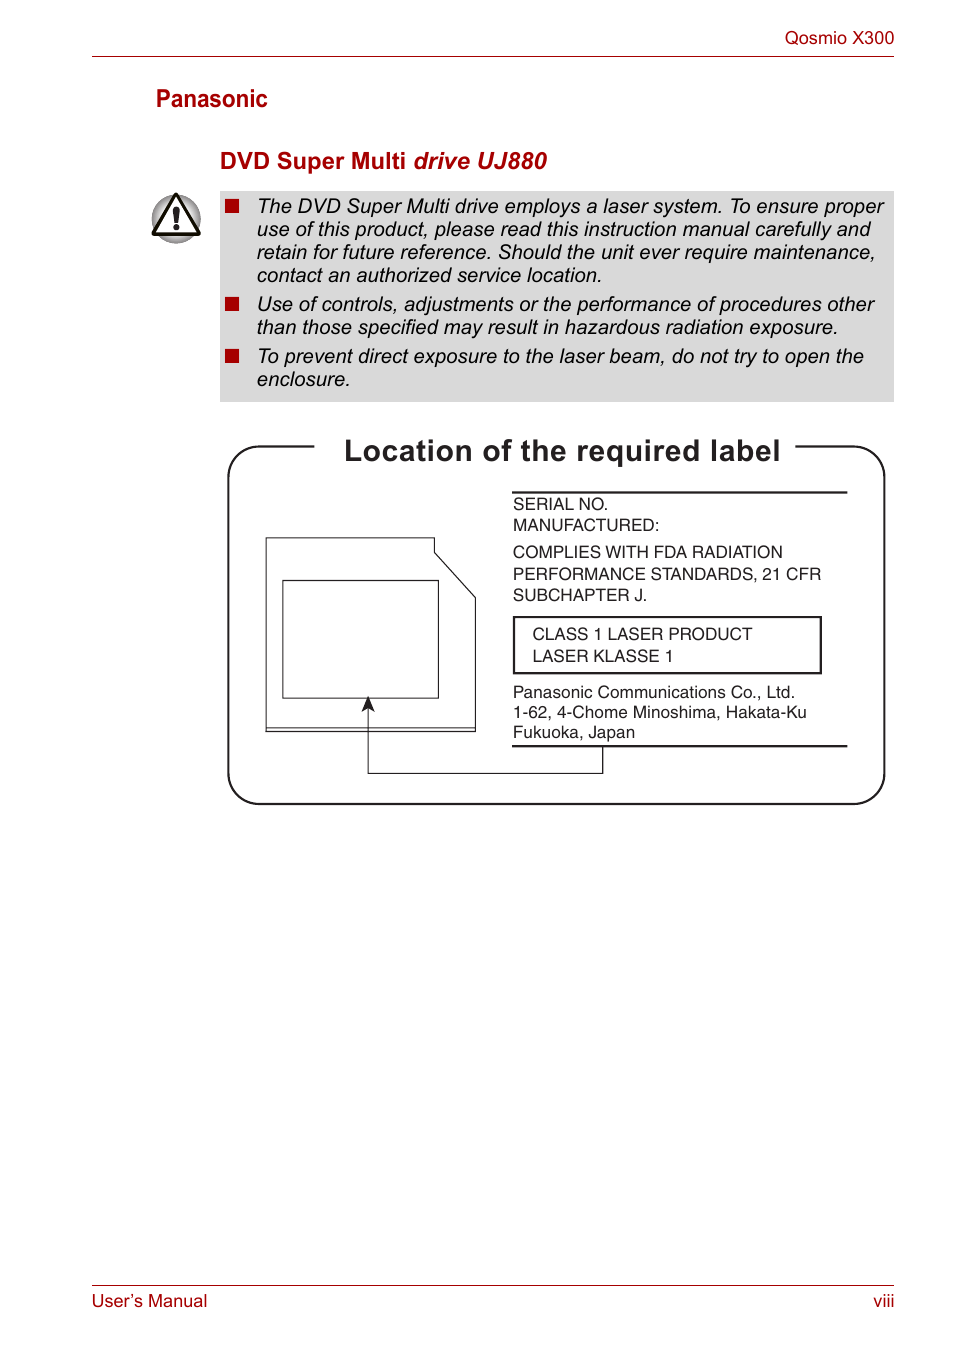 Location of the required label, Panasonic | Toshiba Qosmio X300 User Manual | Page 8 / 220